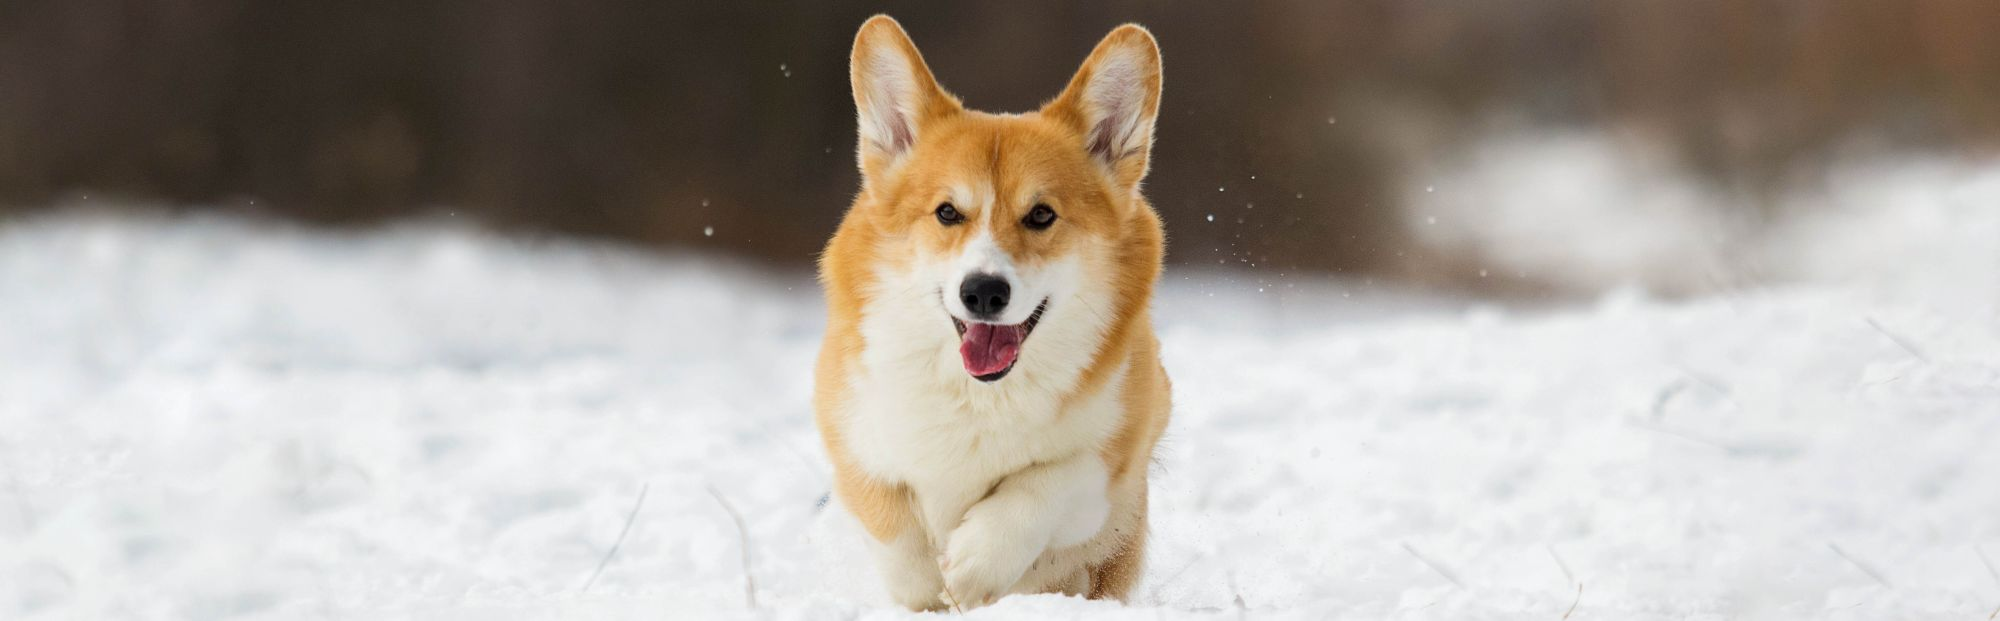 Dog running through the snow